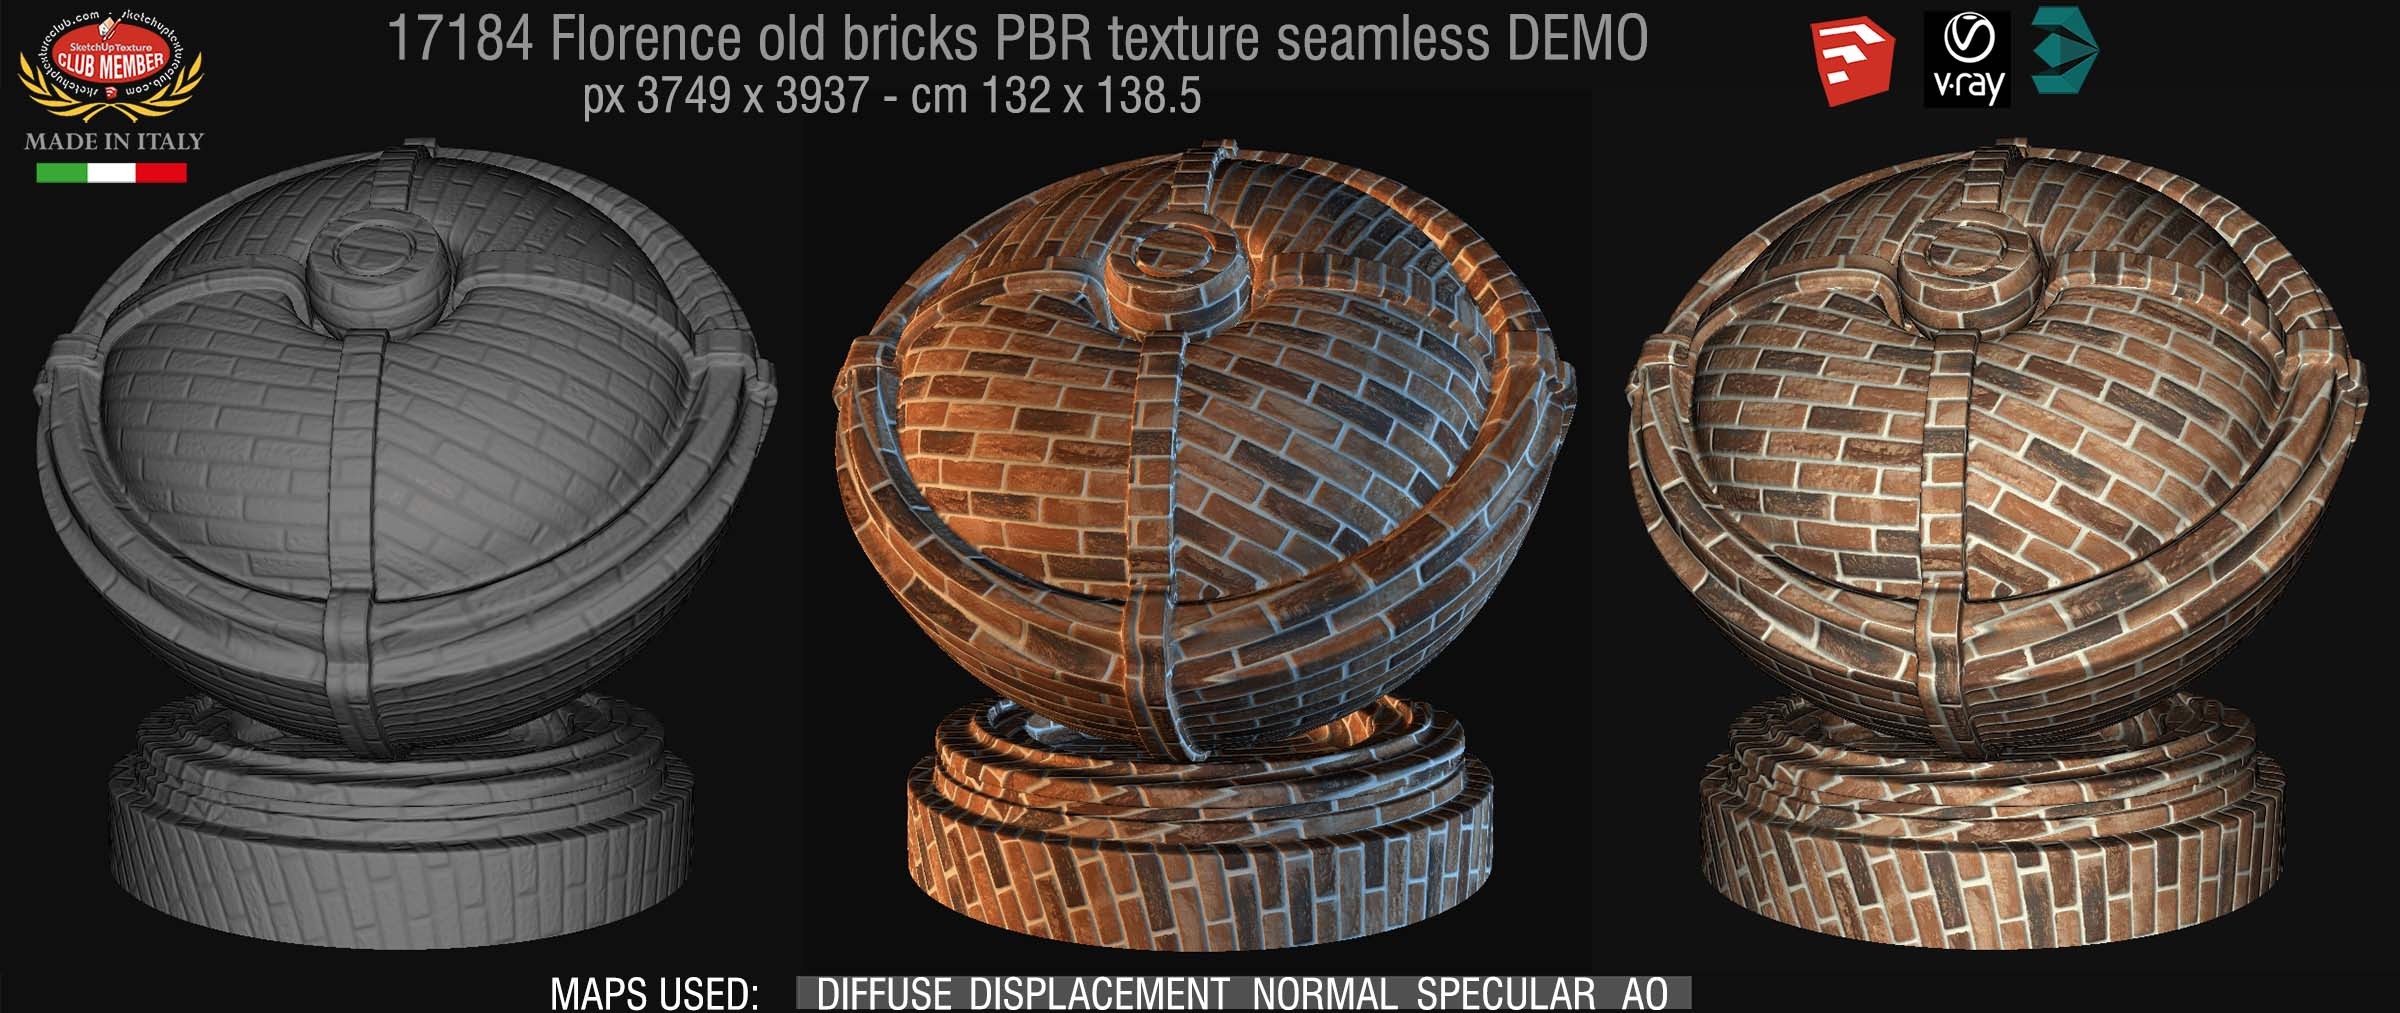 17184 Florence old bricks PBR texture seamless DEMO